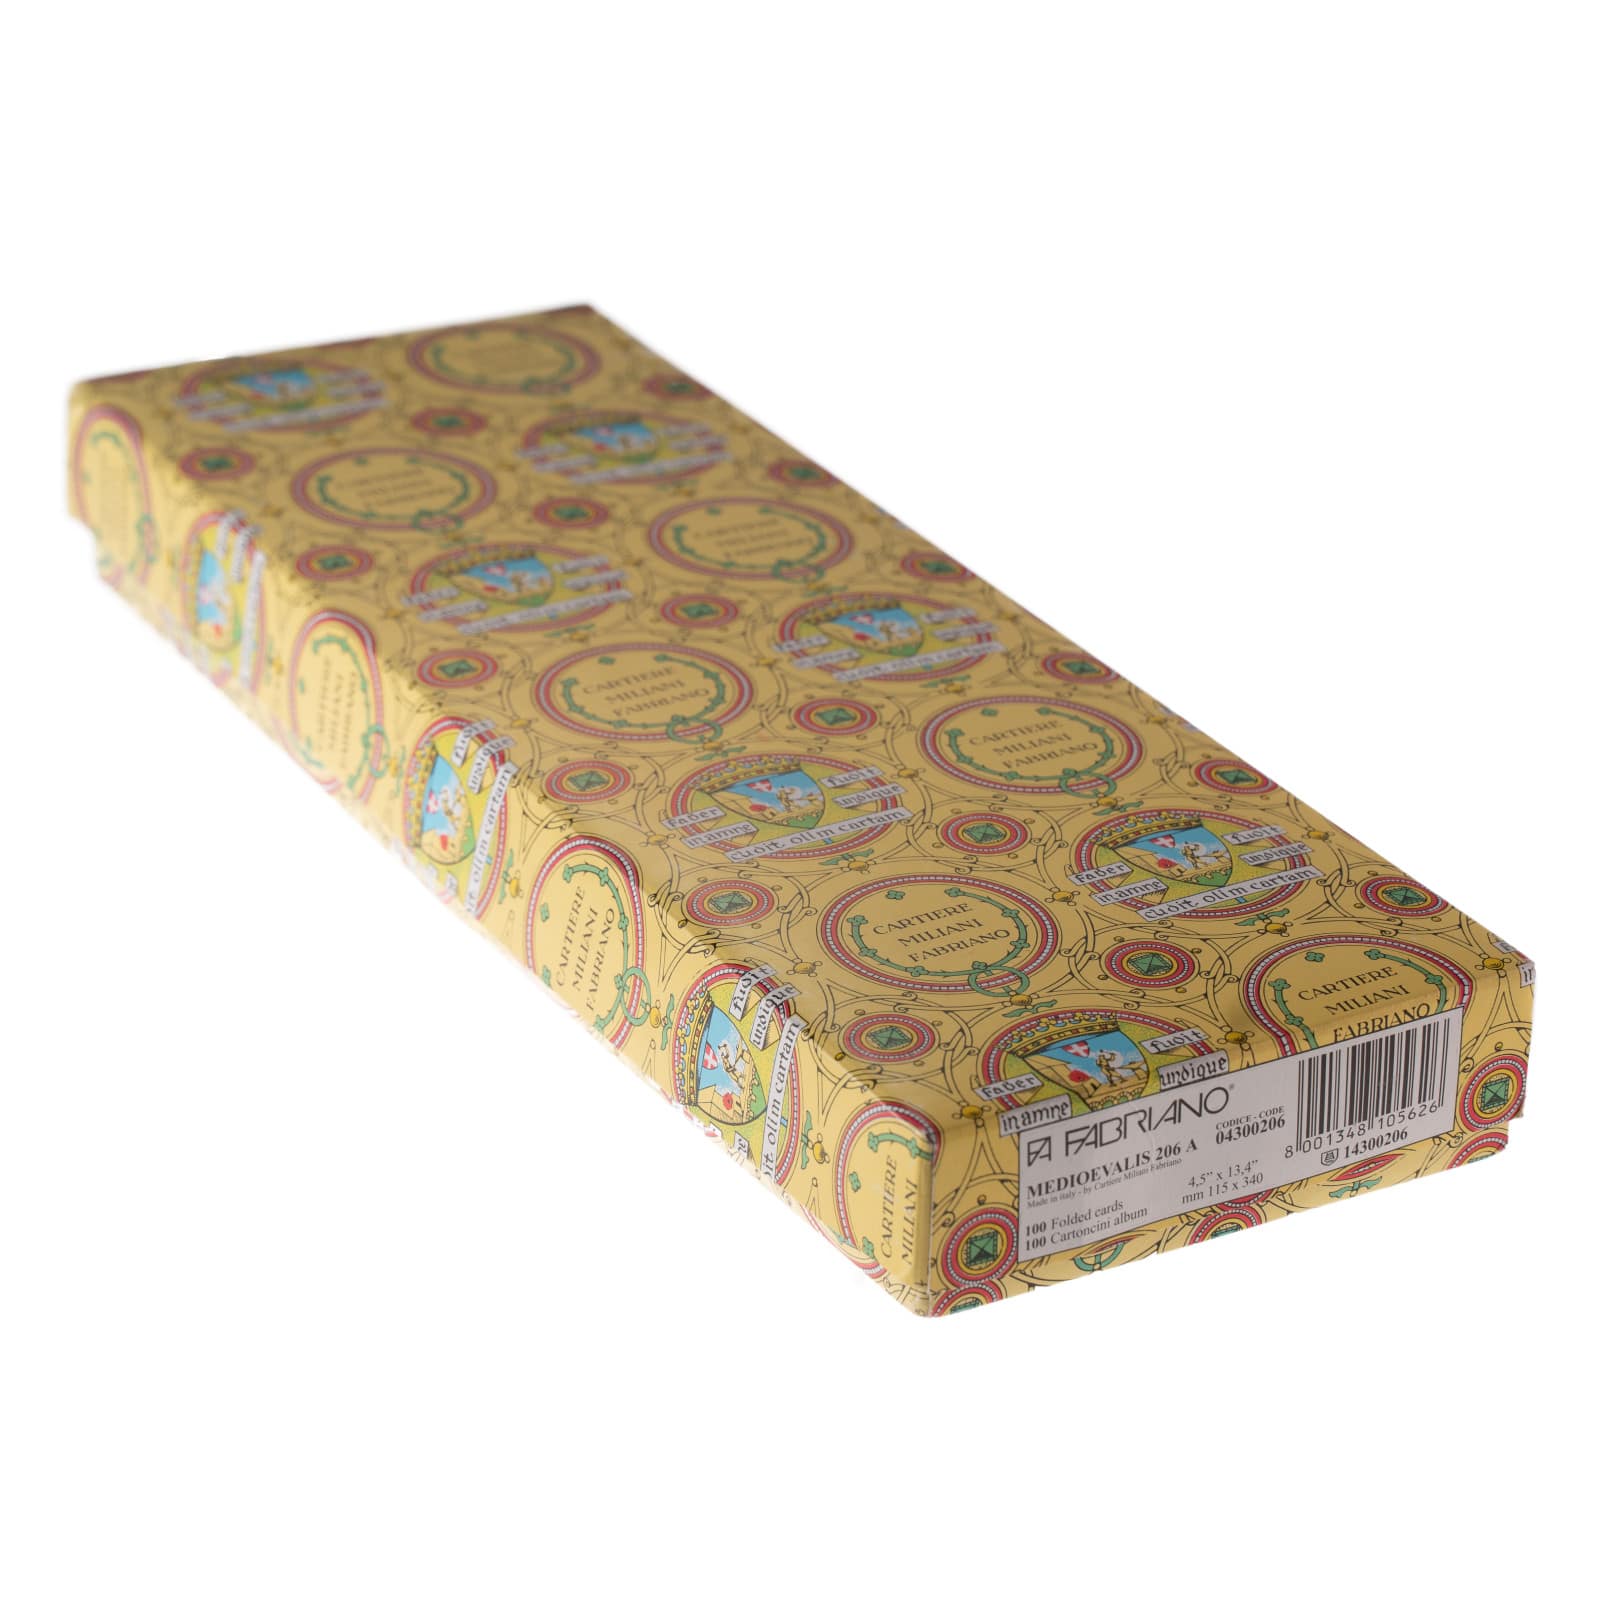 Fabriano&#xAE; Medioevalis 4.5&#x22; x 6.75&#x22; Folded Cards, 100ct.